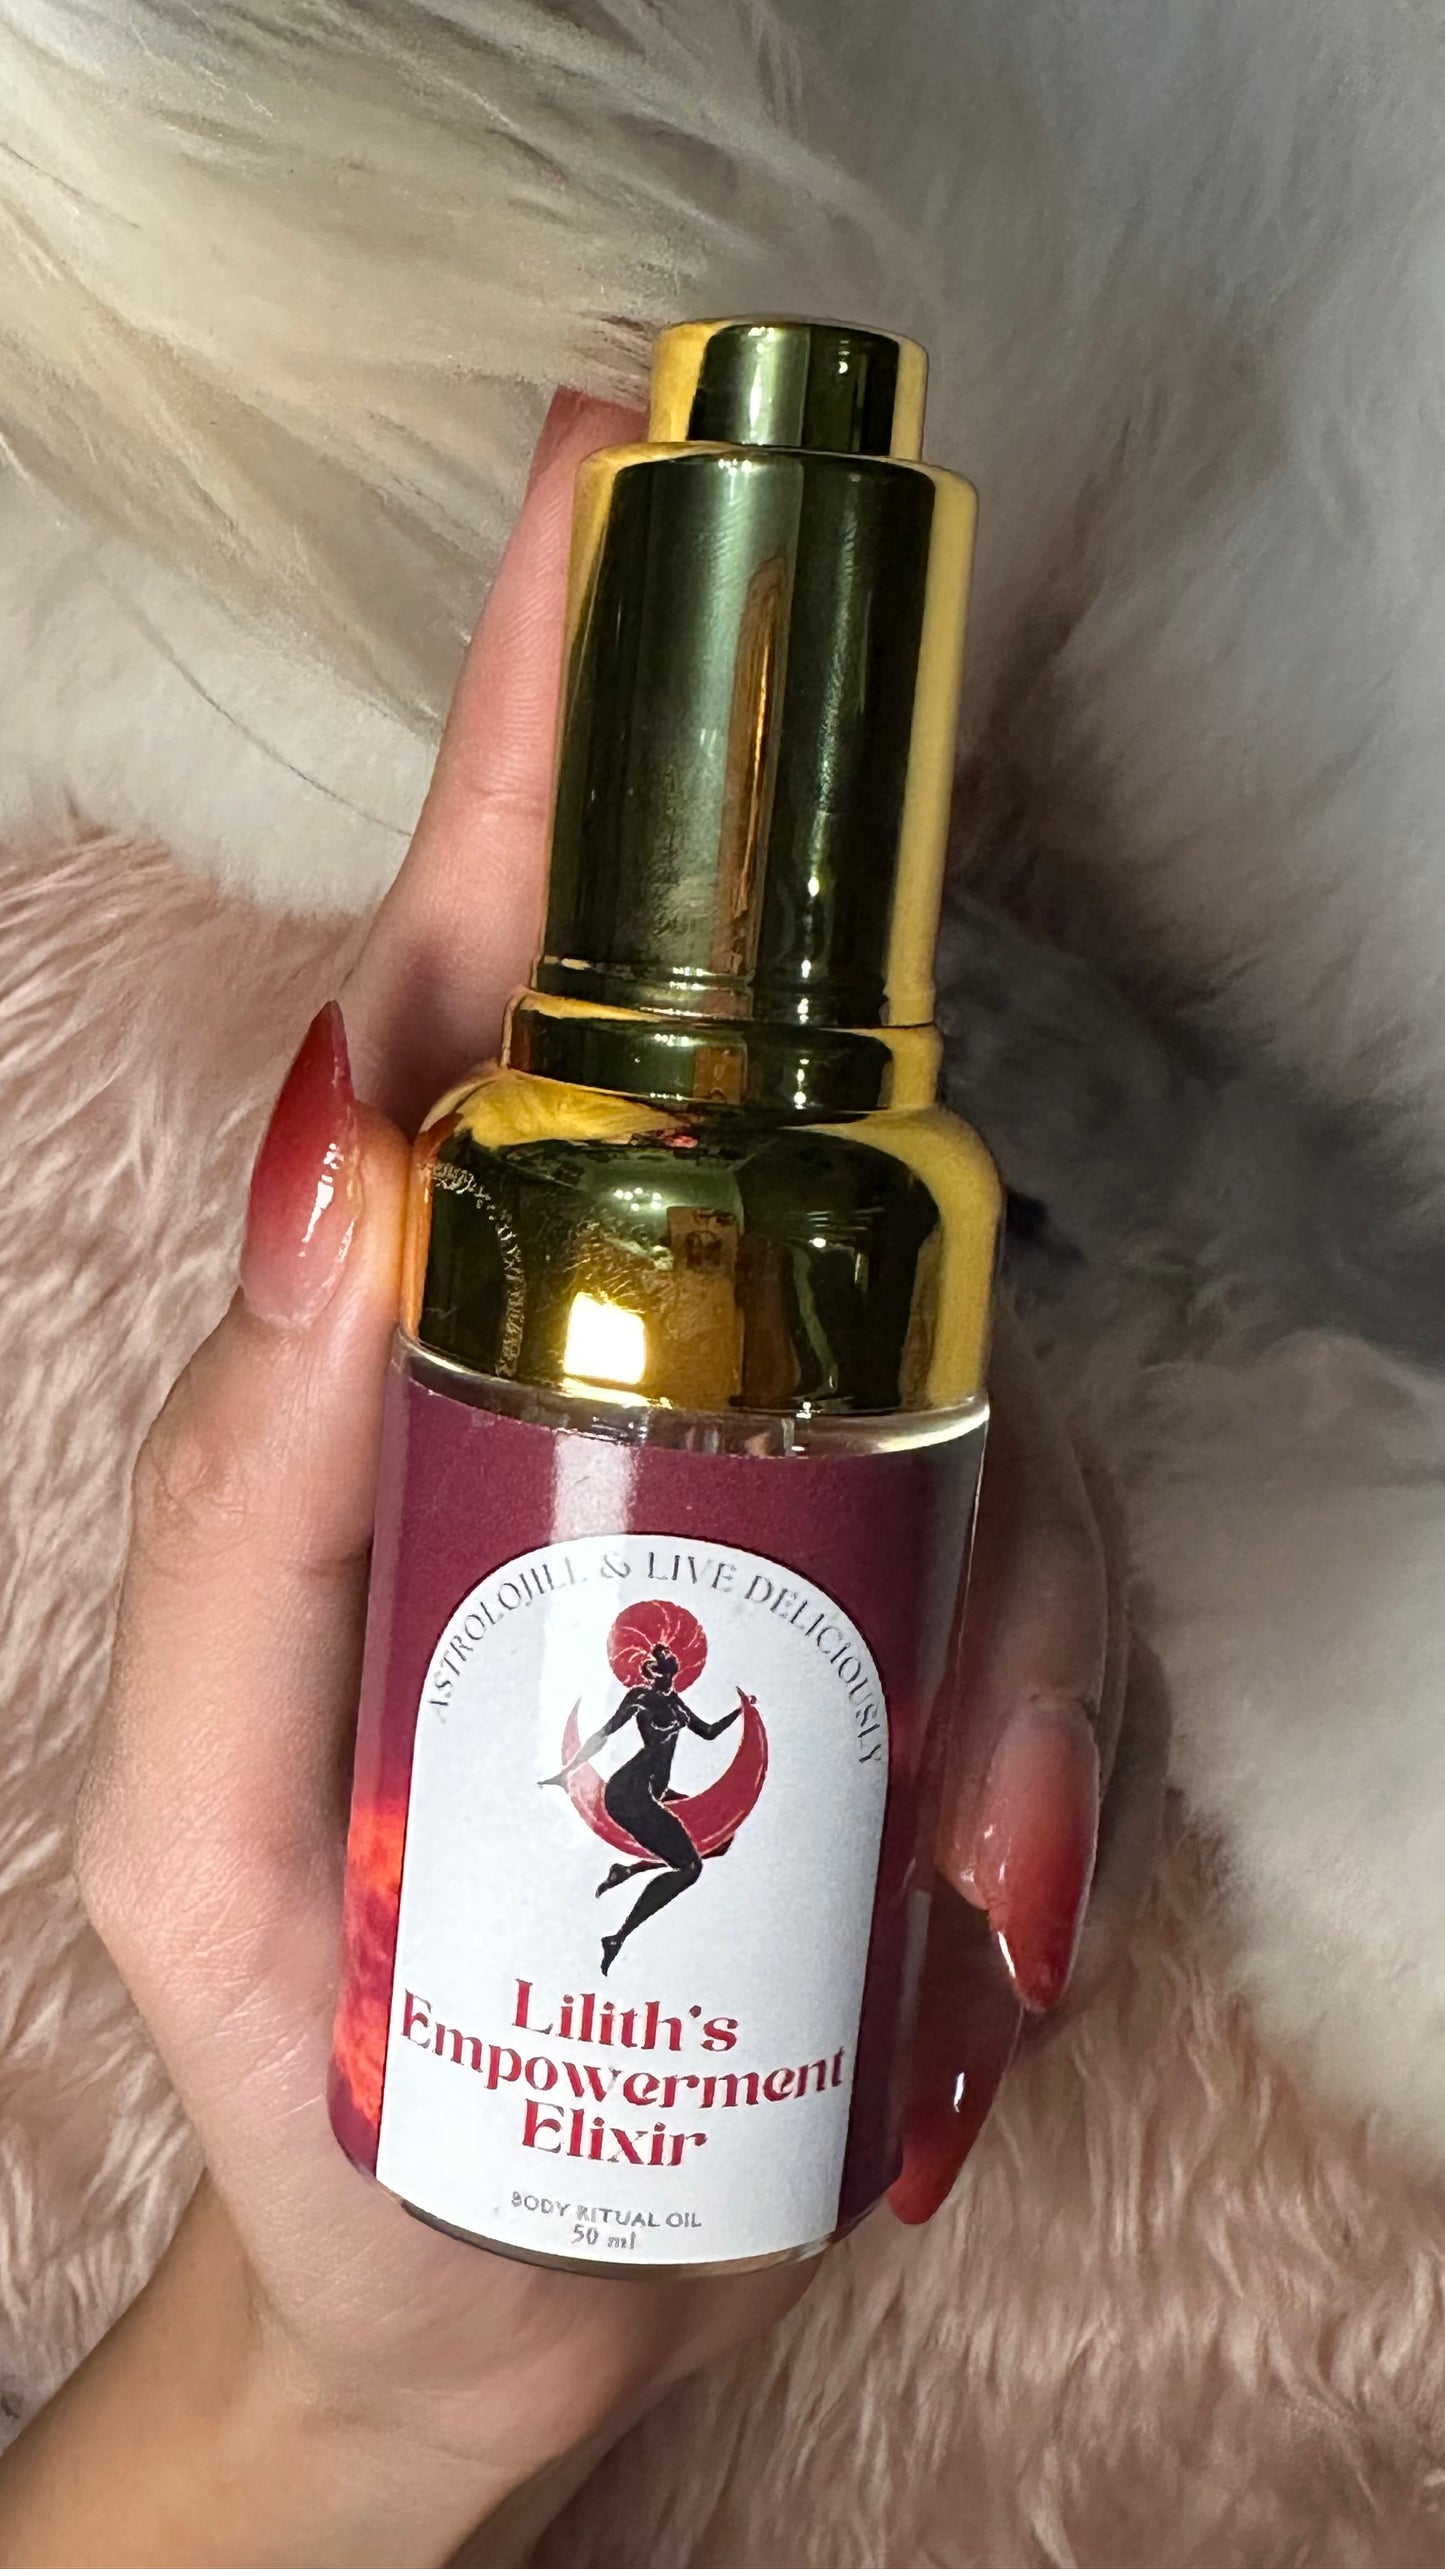 Lilith's Empowerment Elixir Body Ritual Oil